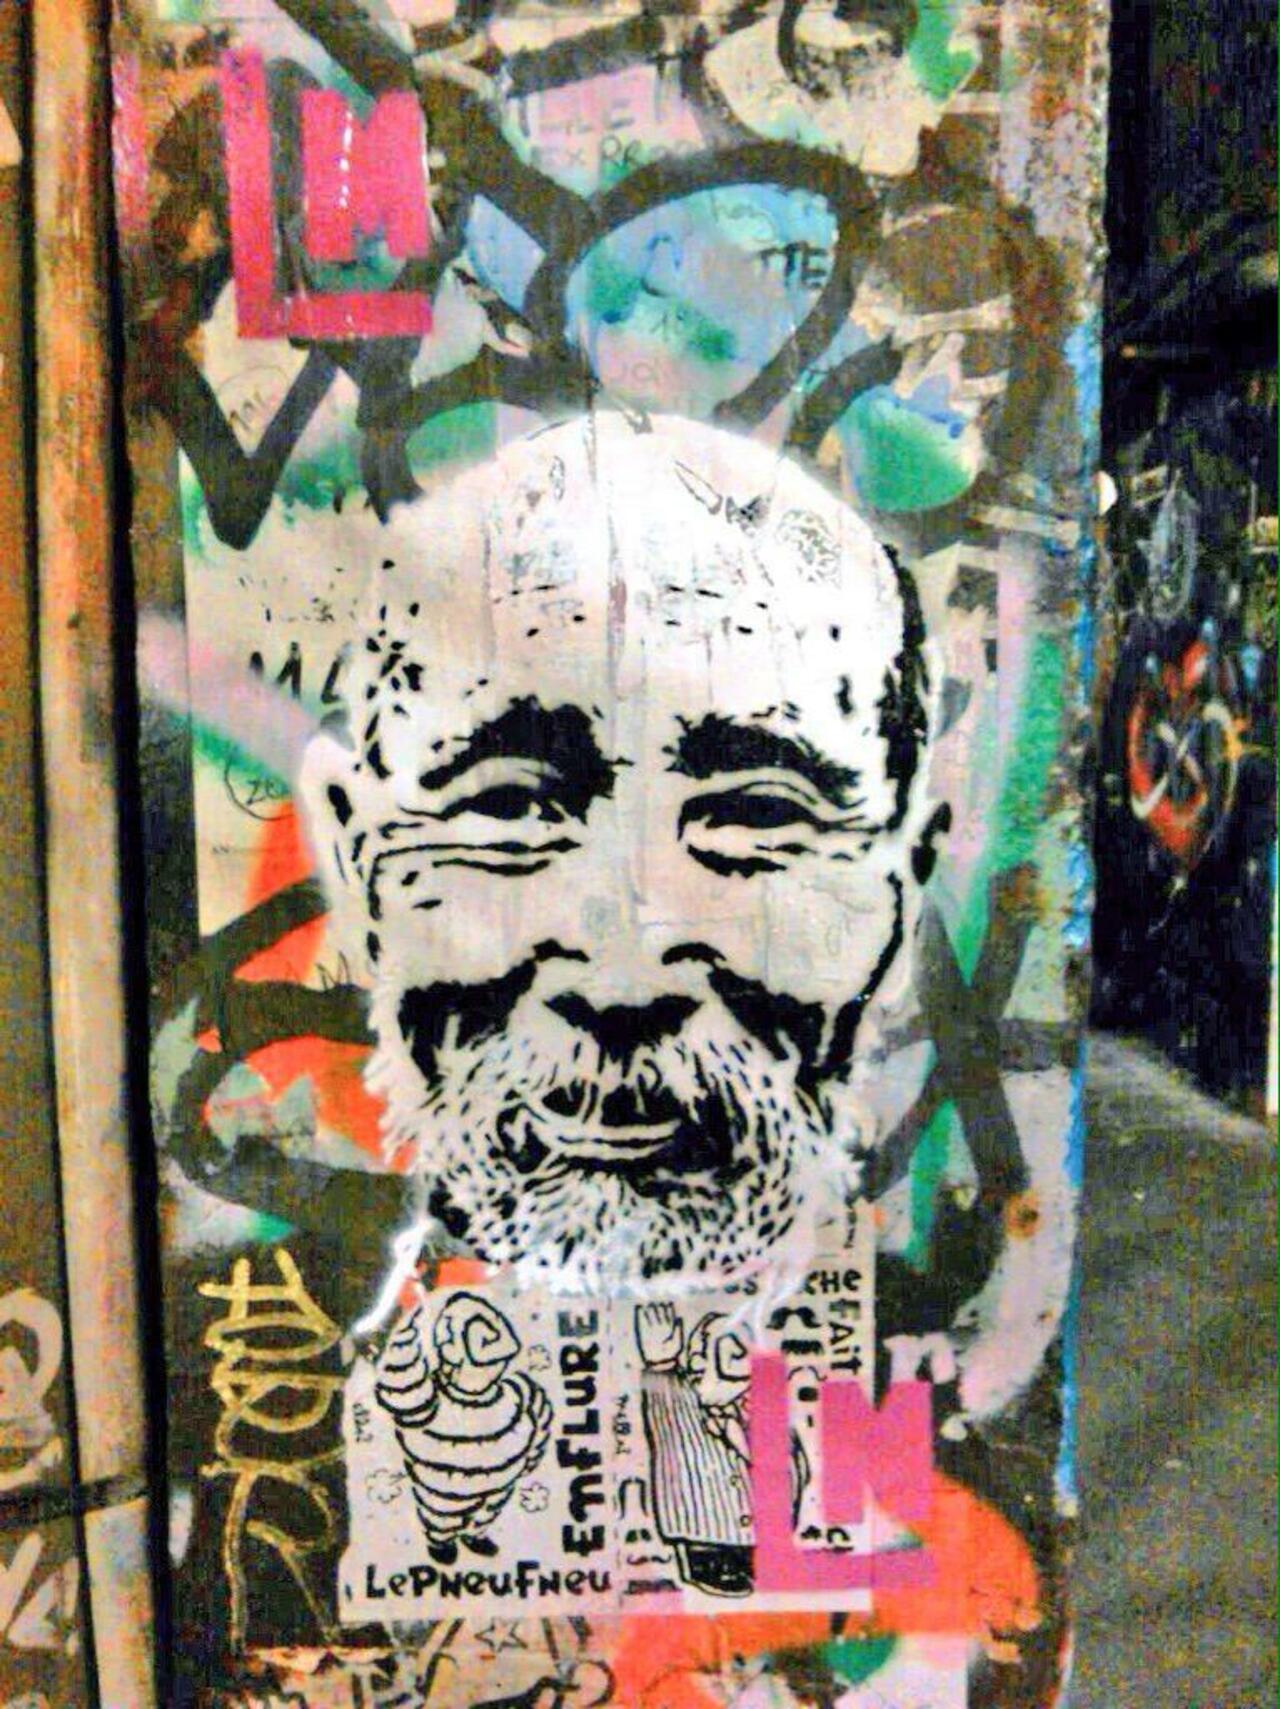 RT @LASCOMARTINEZ: Amsterdam 2015. #stencils #streetart #Amsterdam #pochoir #art #graffiti #design http://t.co/E3AEpcxQGZ